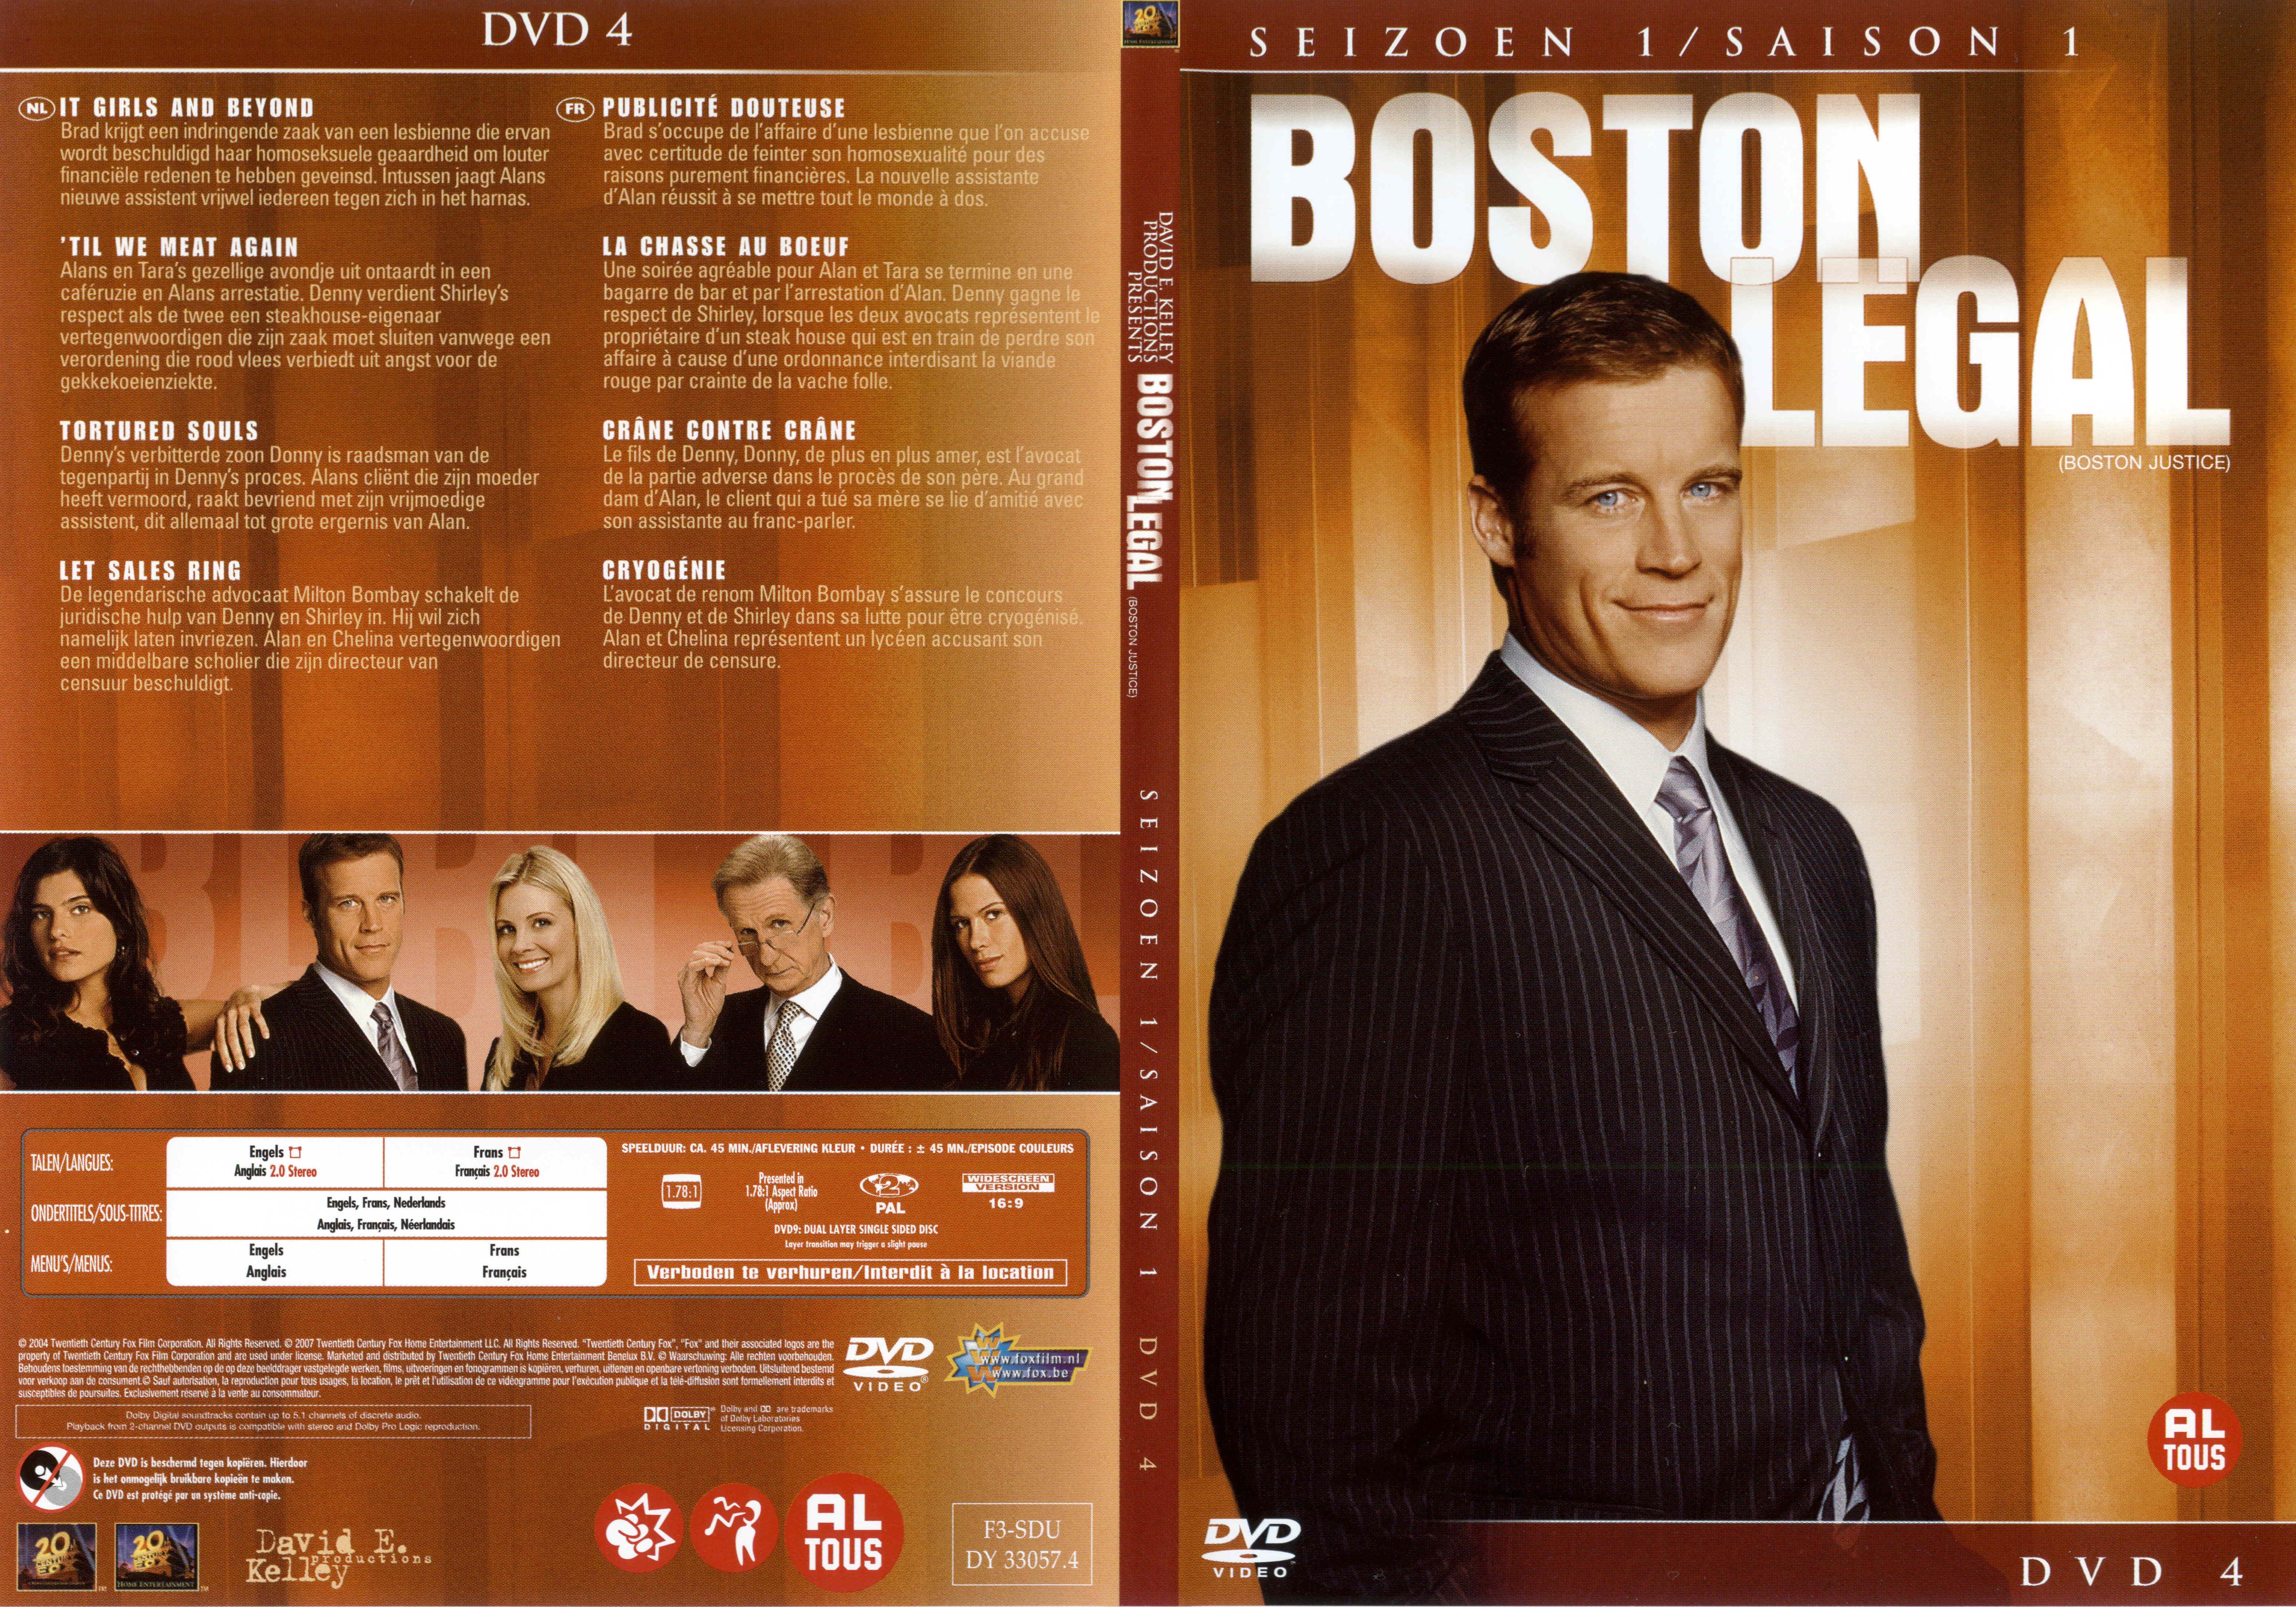 Jaquette DVD Boston legal - Boston justice Saison 1 DVD 4